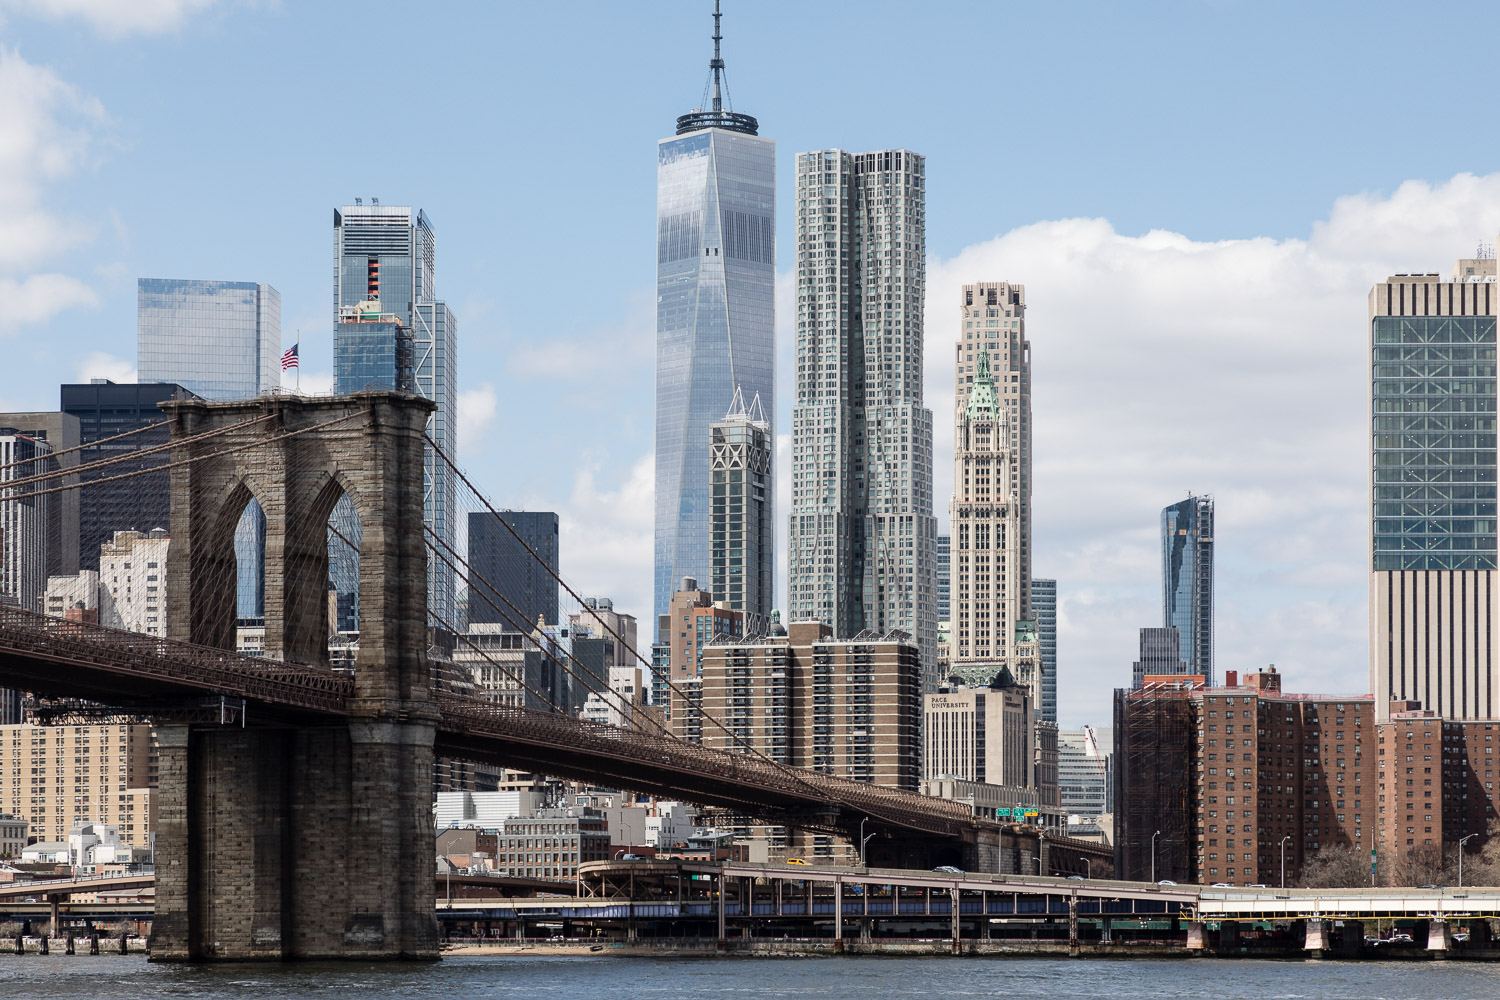 Manhattan Buildings and the Brooklyn Bridge